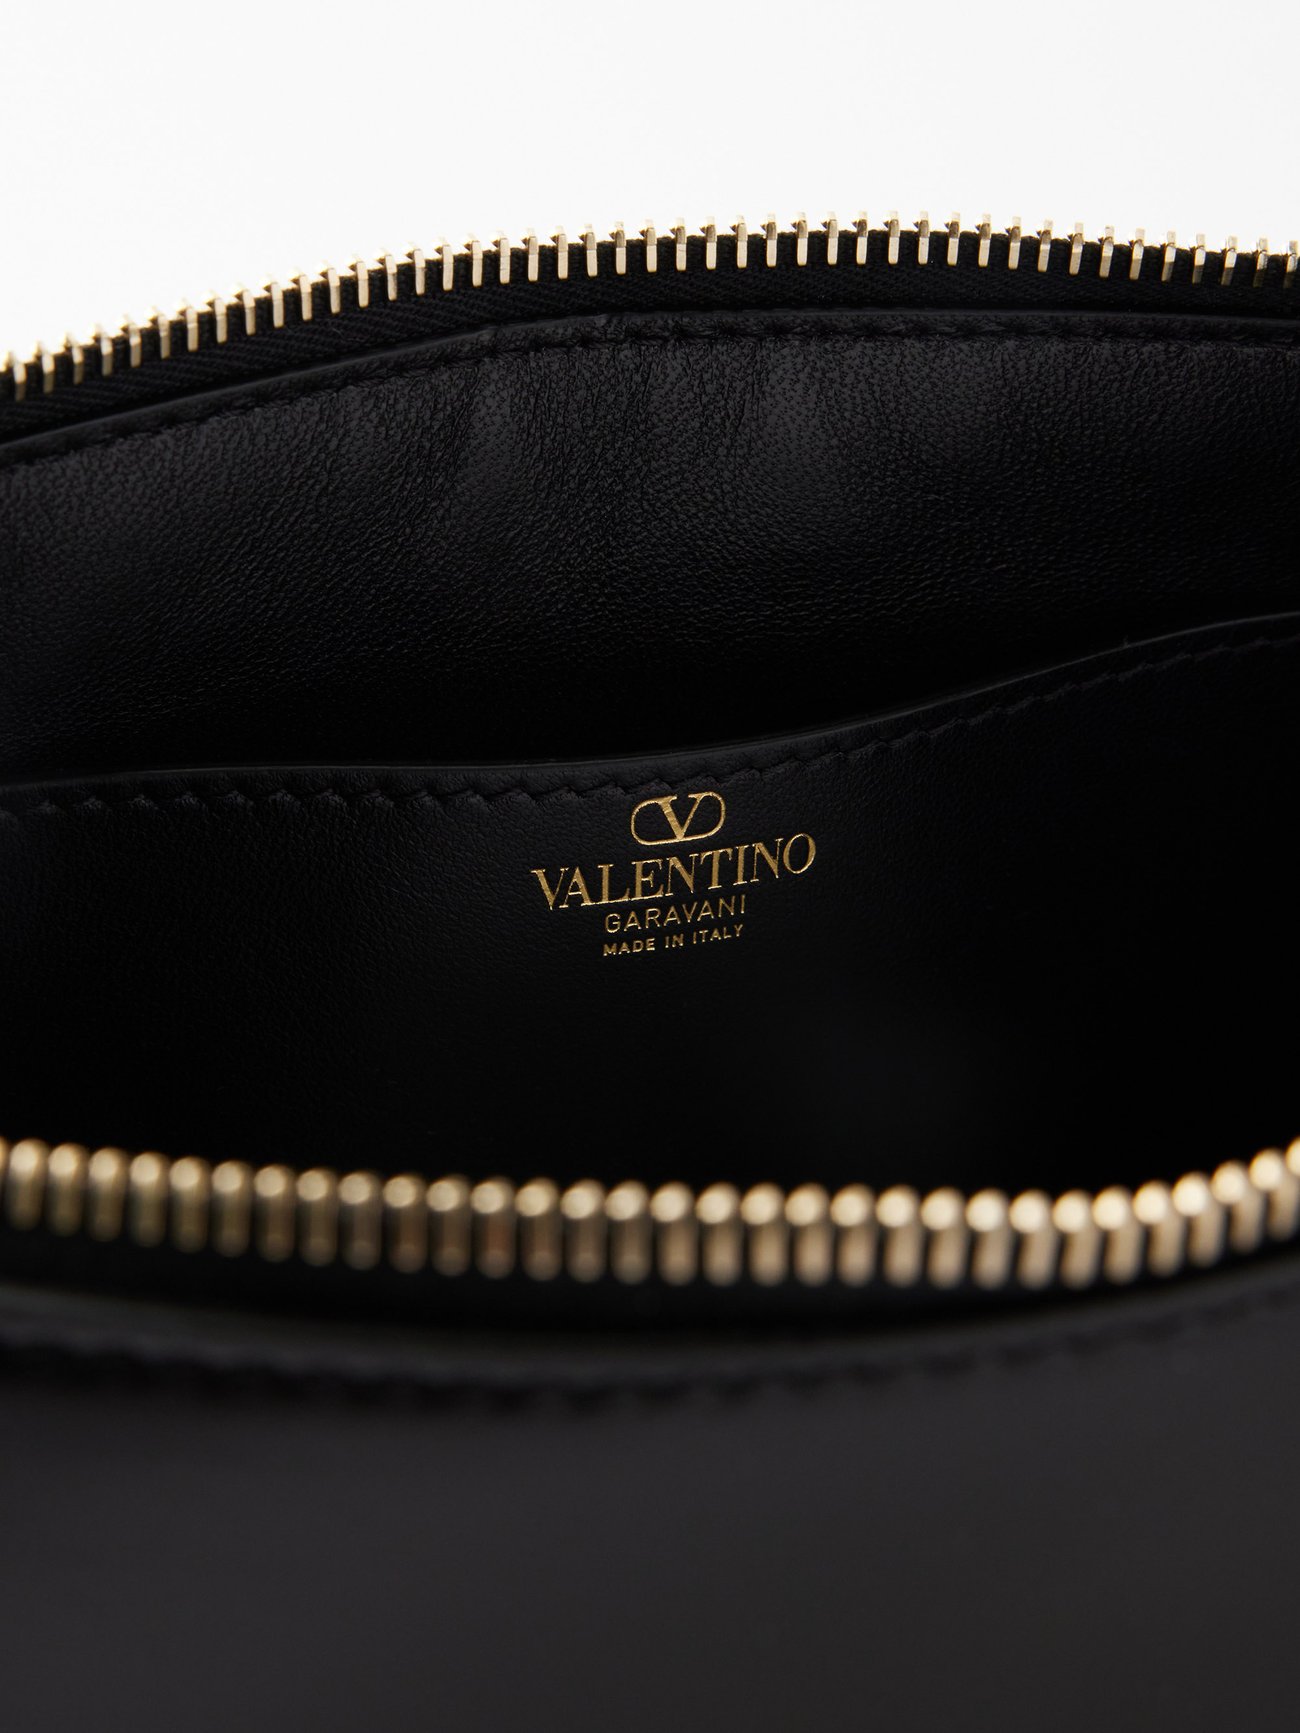 Black Rockstud leather clutch bag, Valentino Garavani